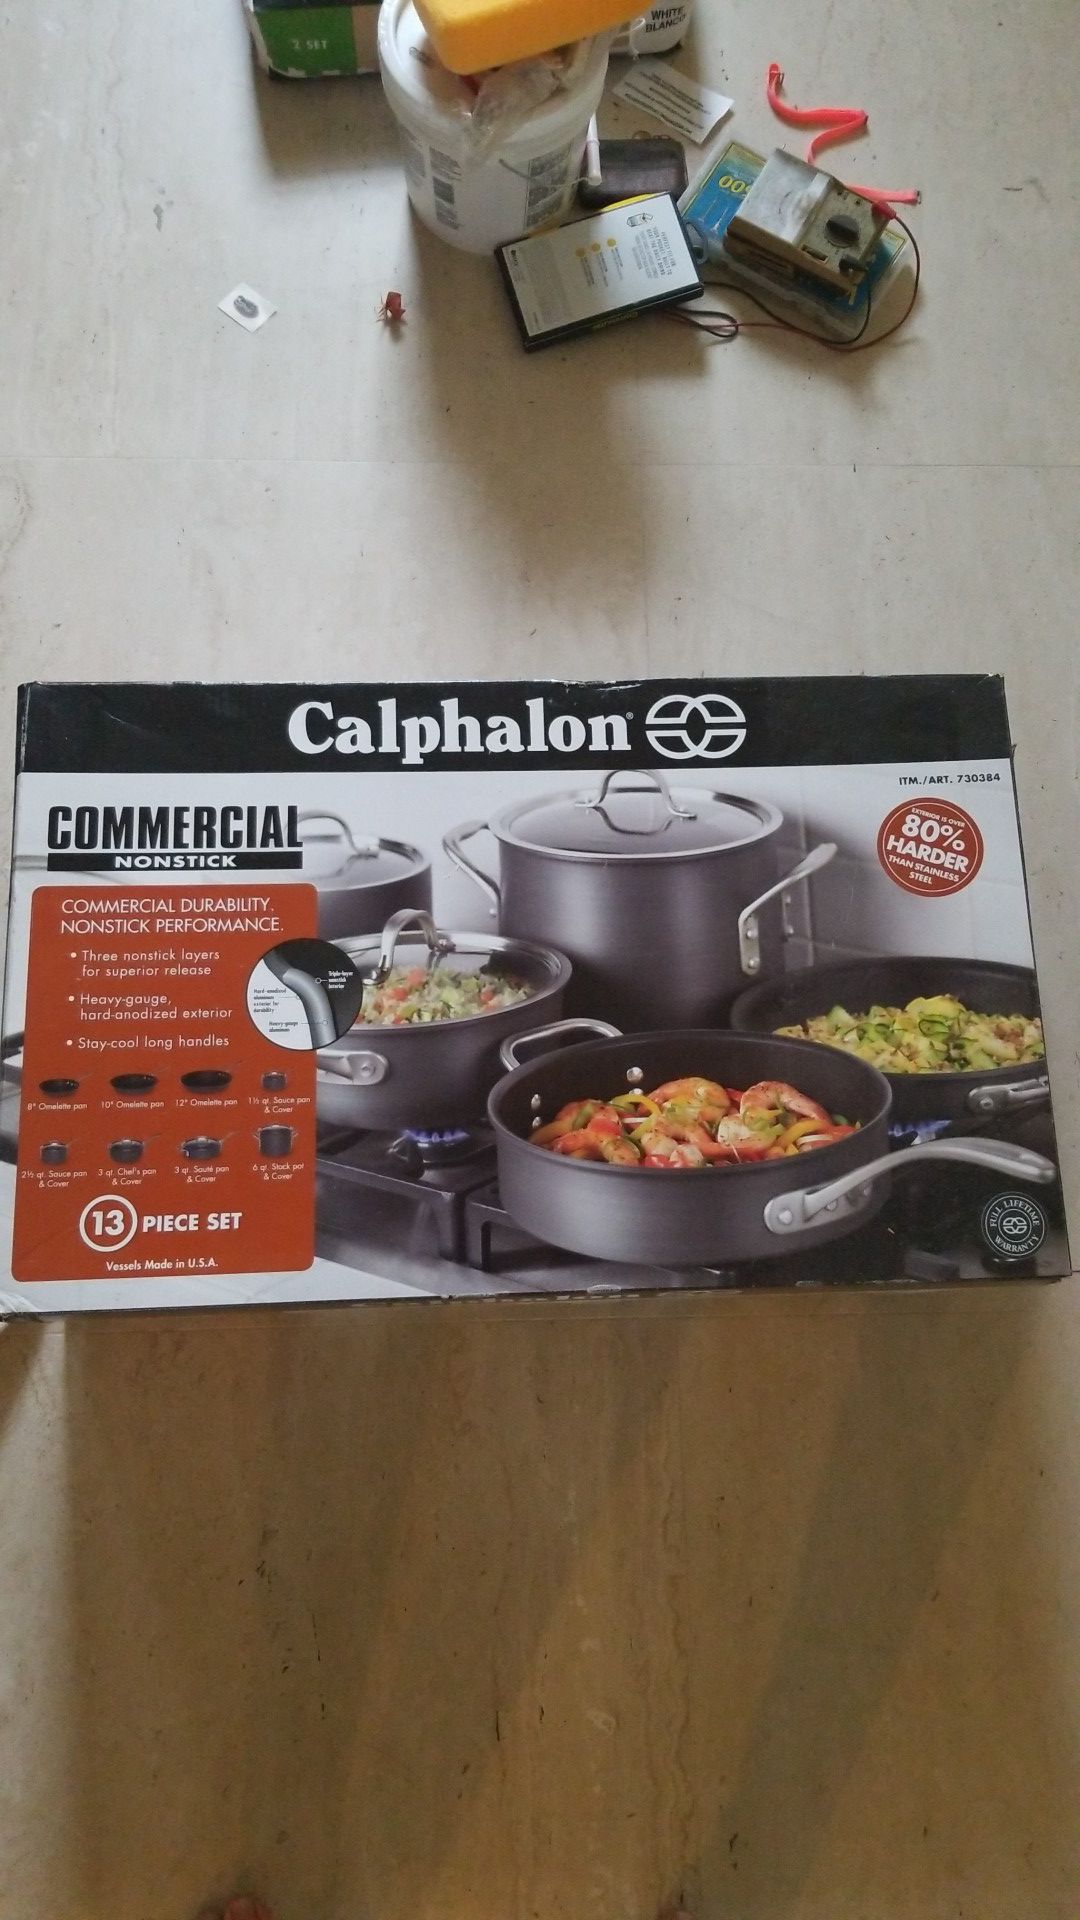 Calphalon commercial nonstick 13 piece cookware set